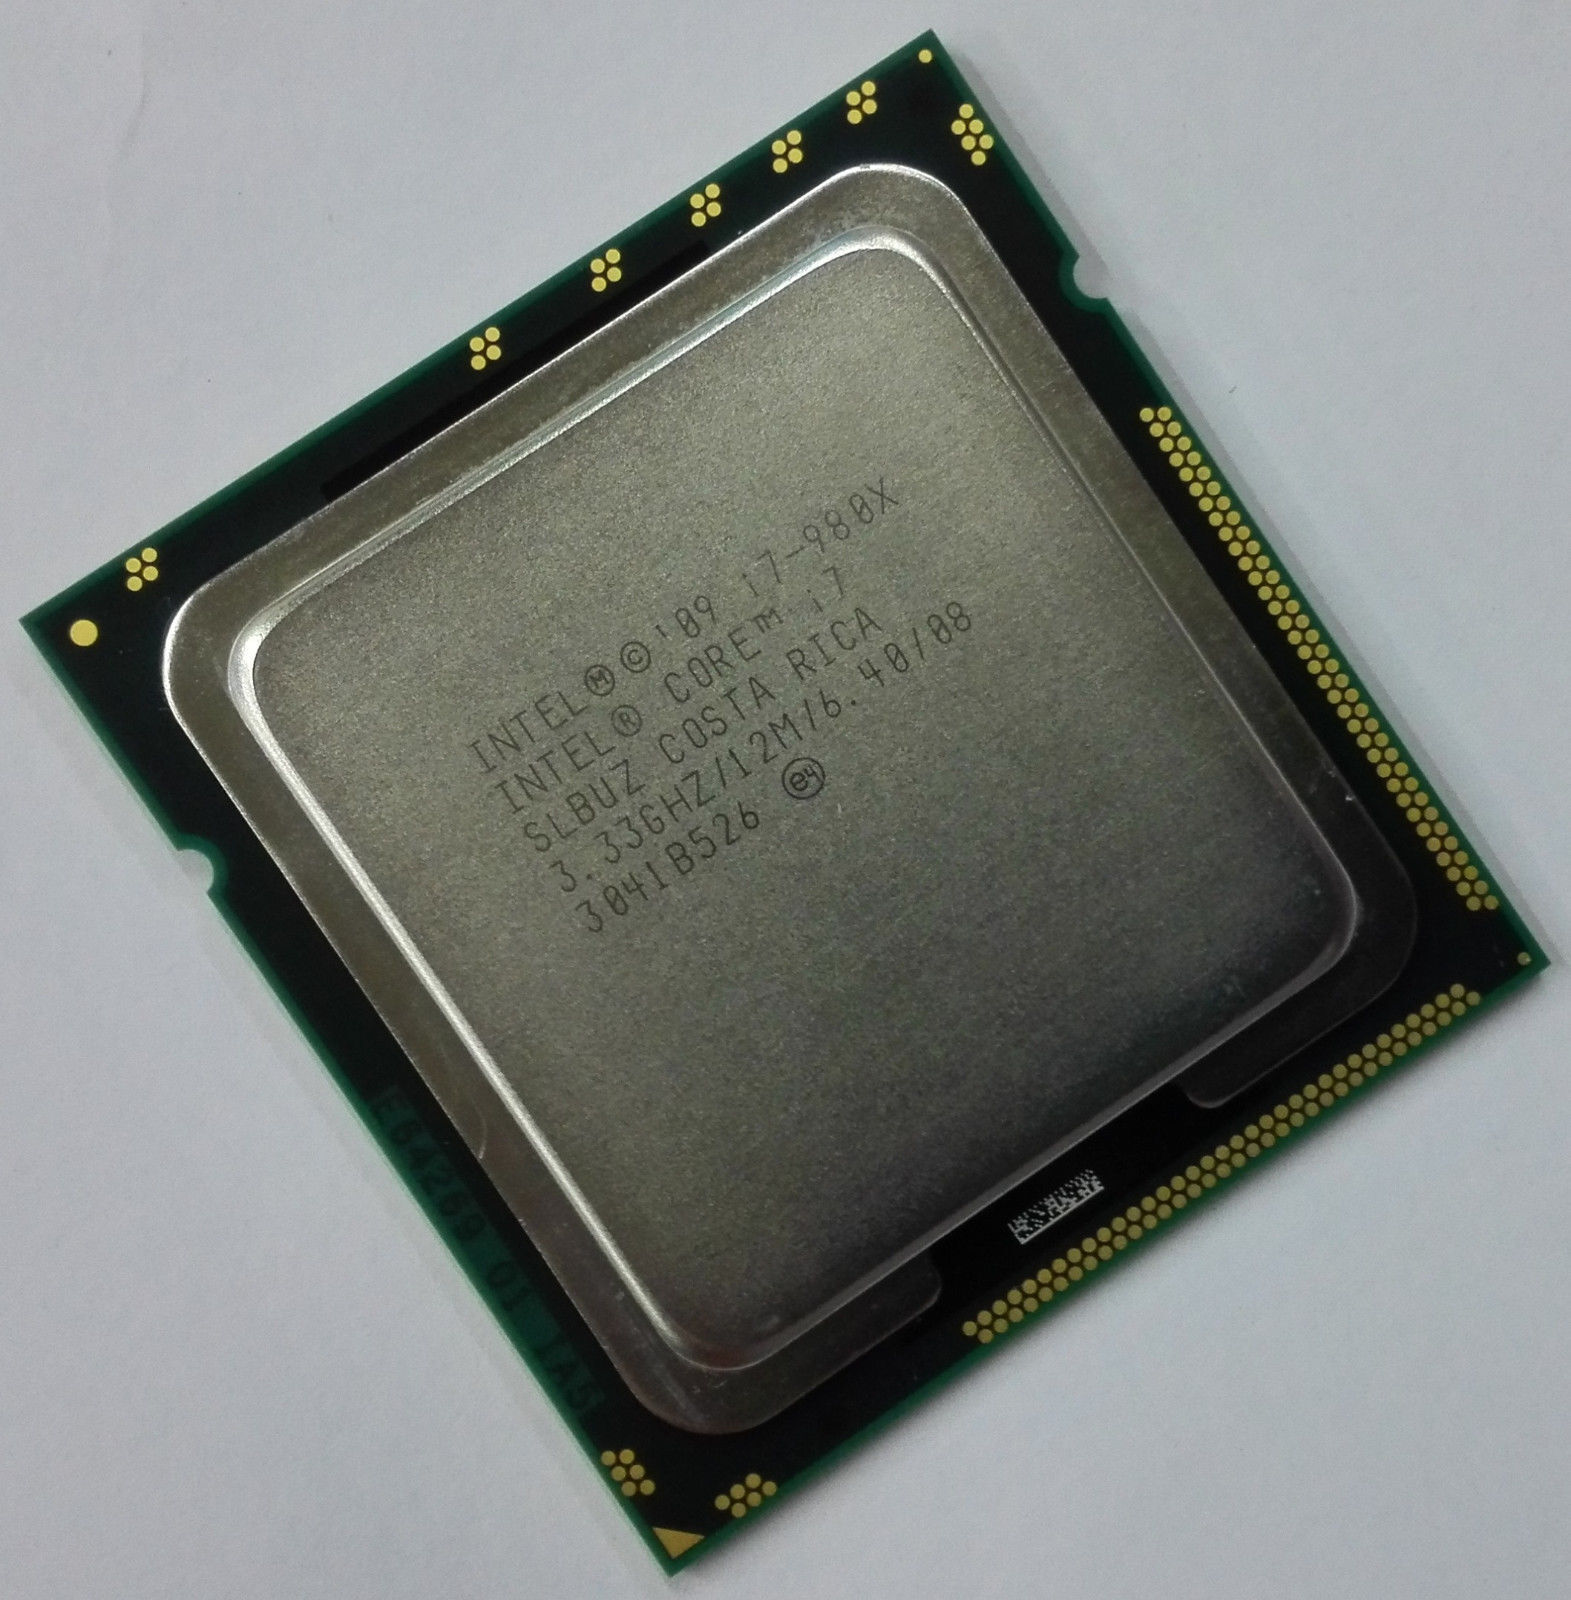 Intel Core i7-980X Extreme Edition 3.33 GHz Six Core Processor SLBUZ LGA 1366 B